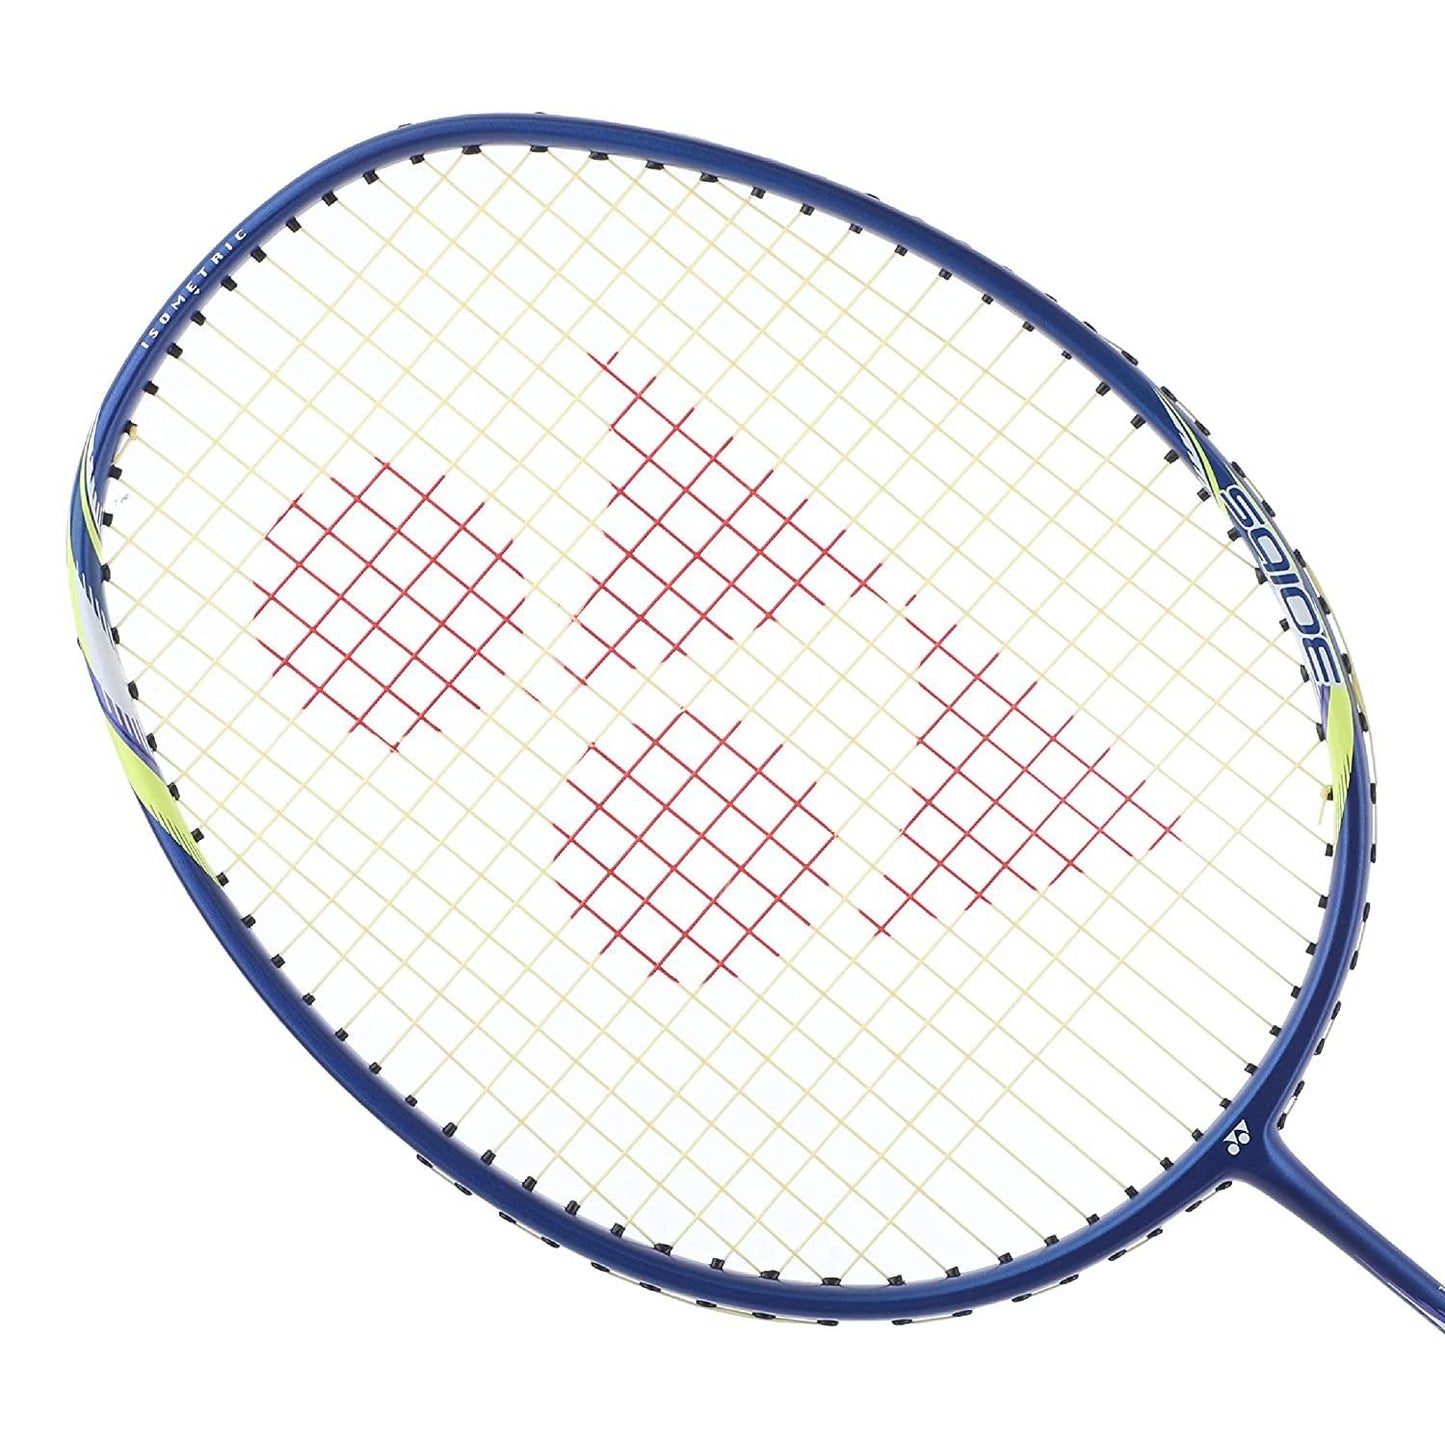 Yonex Voltric Lite 20i Unstrung Graphite Badminton Racquet (78g, 30 lbs Tension) - Best Price online Prokicksports.com